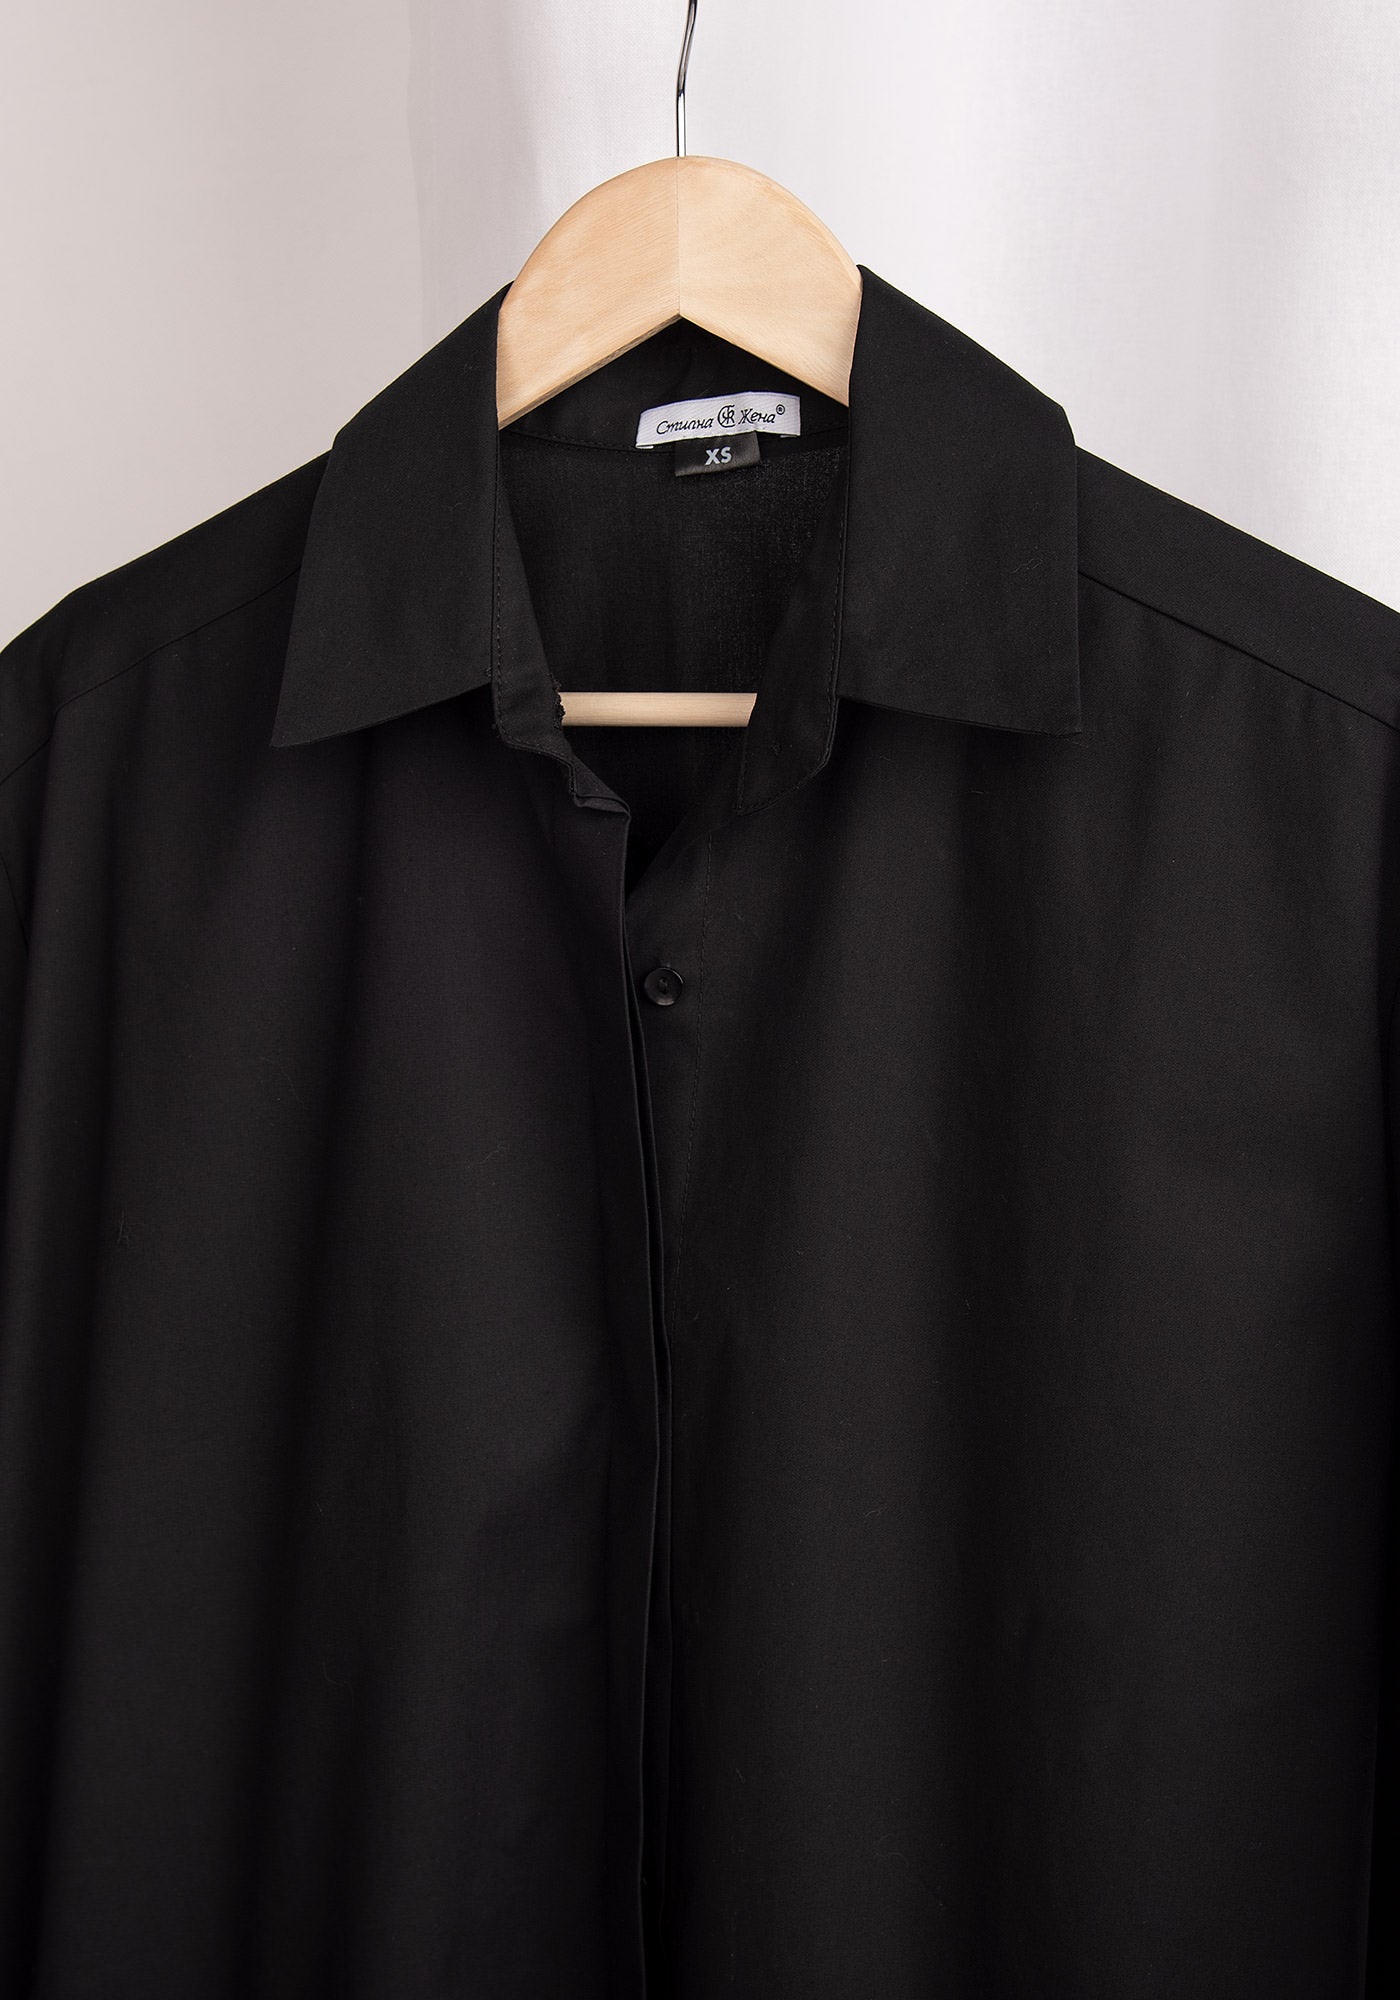 Women's Oversized Button up Shirt in Black Cotton Poplin